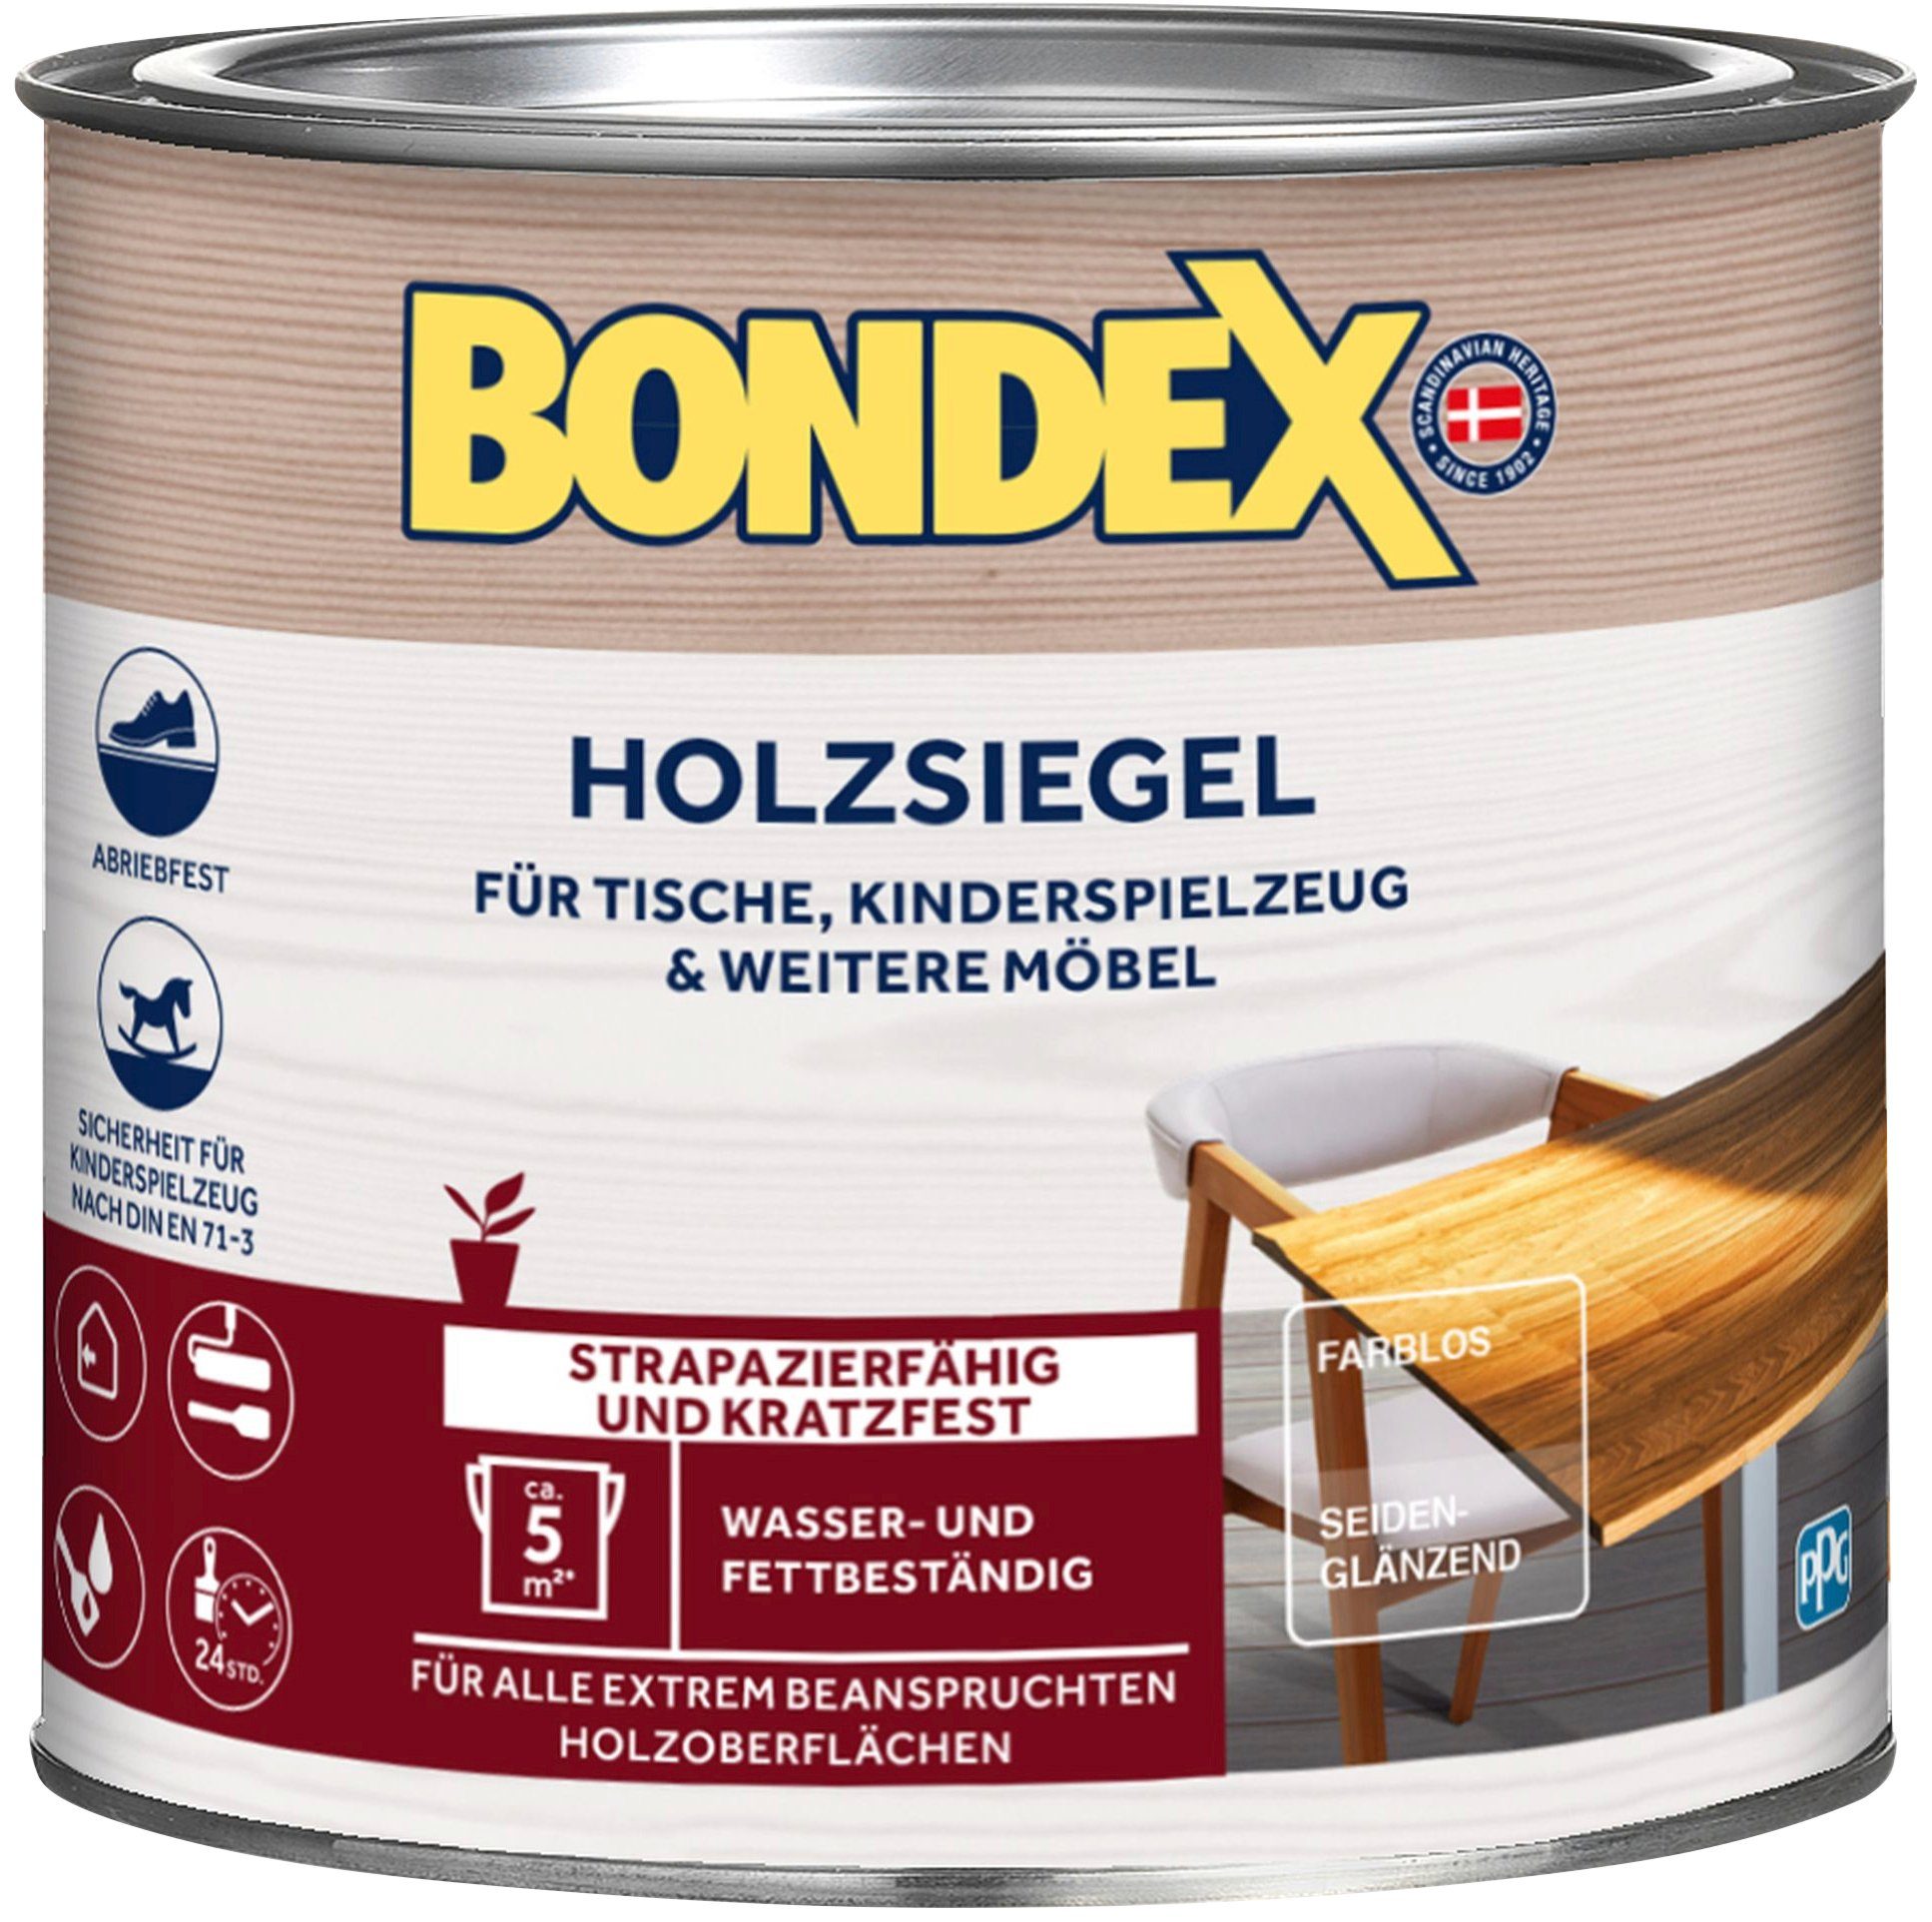 Bondex Lasur HOLZSIEGEL, Farblos / Matt, 0,25 Liter Inhalt Farblos / Seidenglänzend